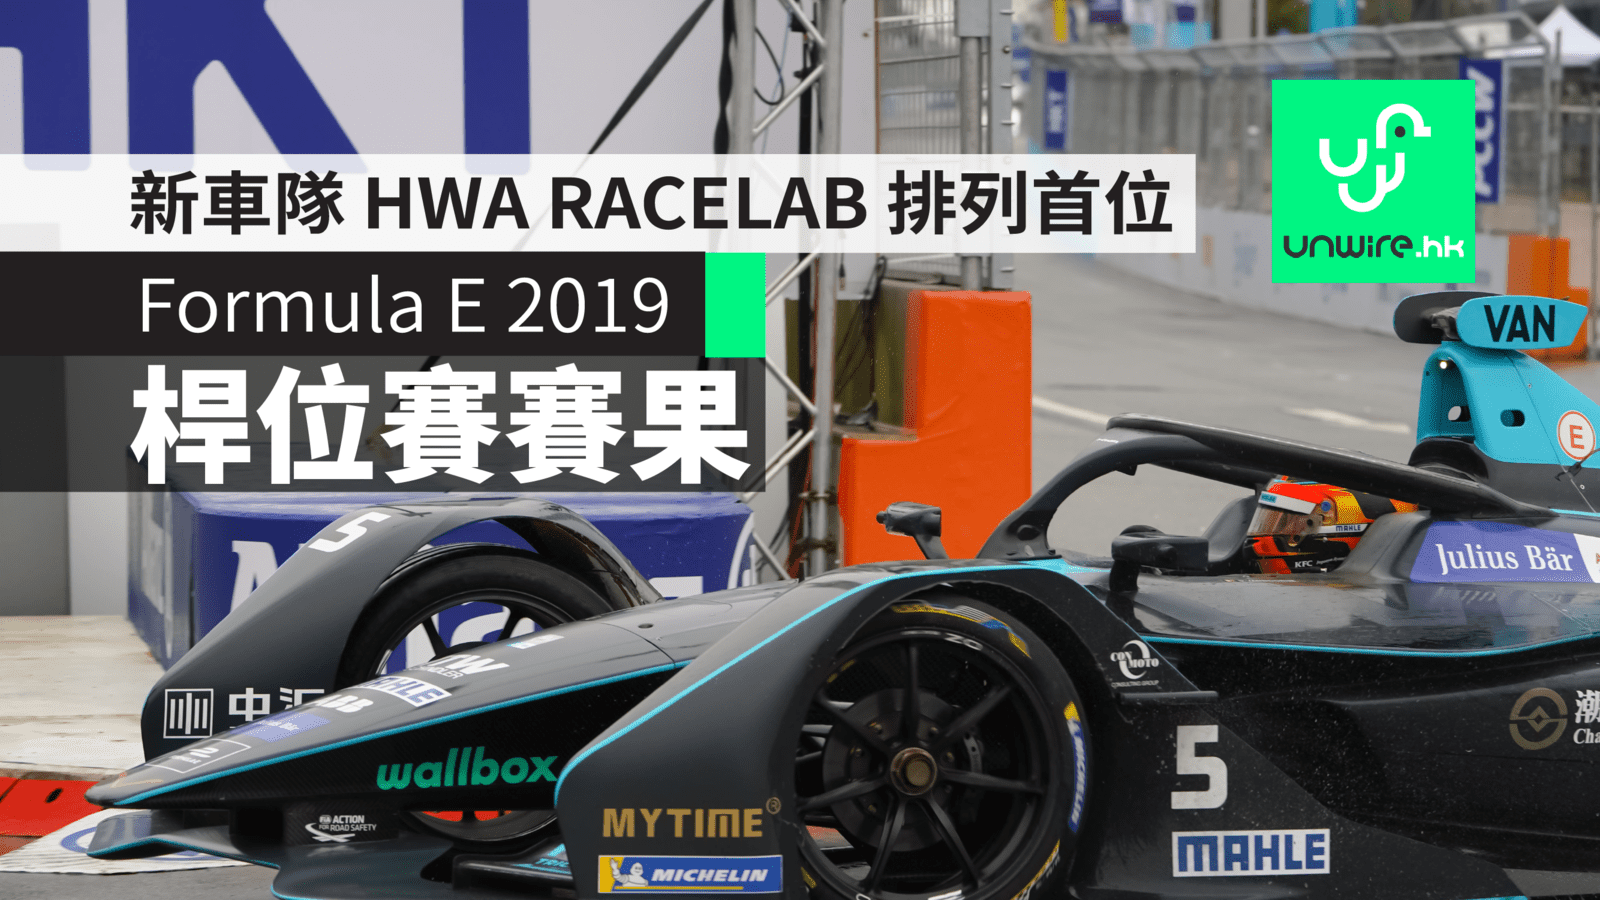 Formula E 2019 Hwa Racelab Unwire Hk Line